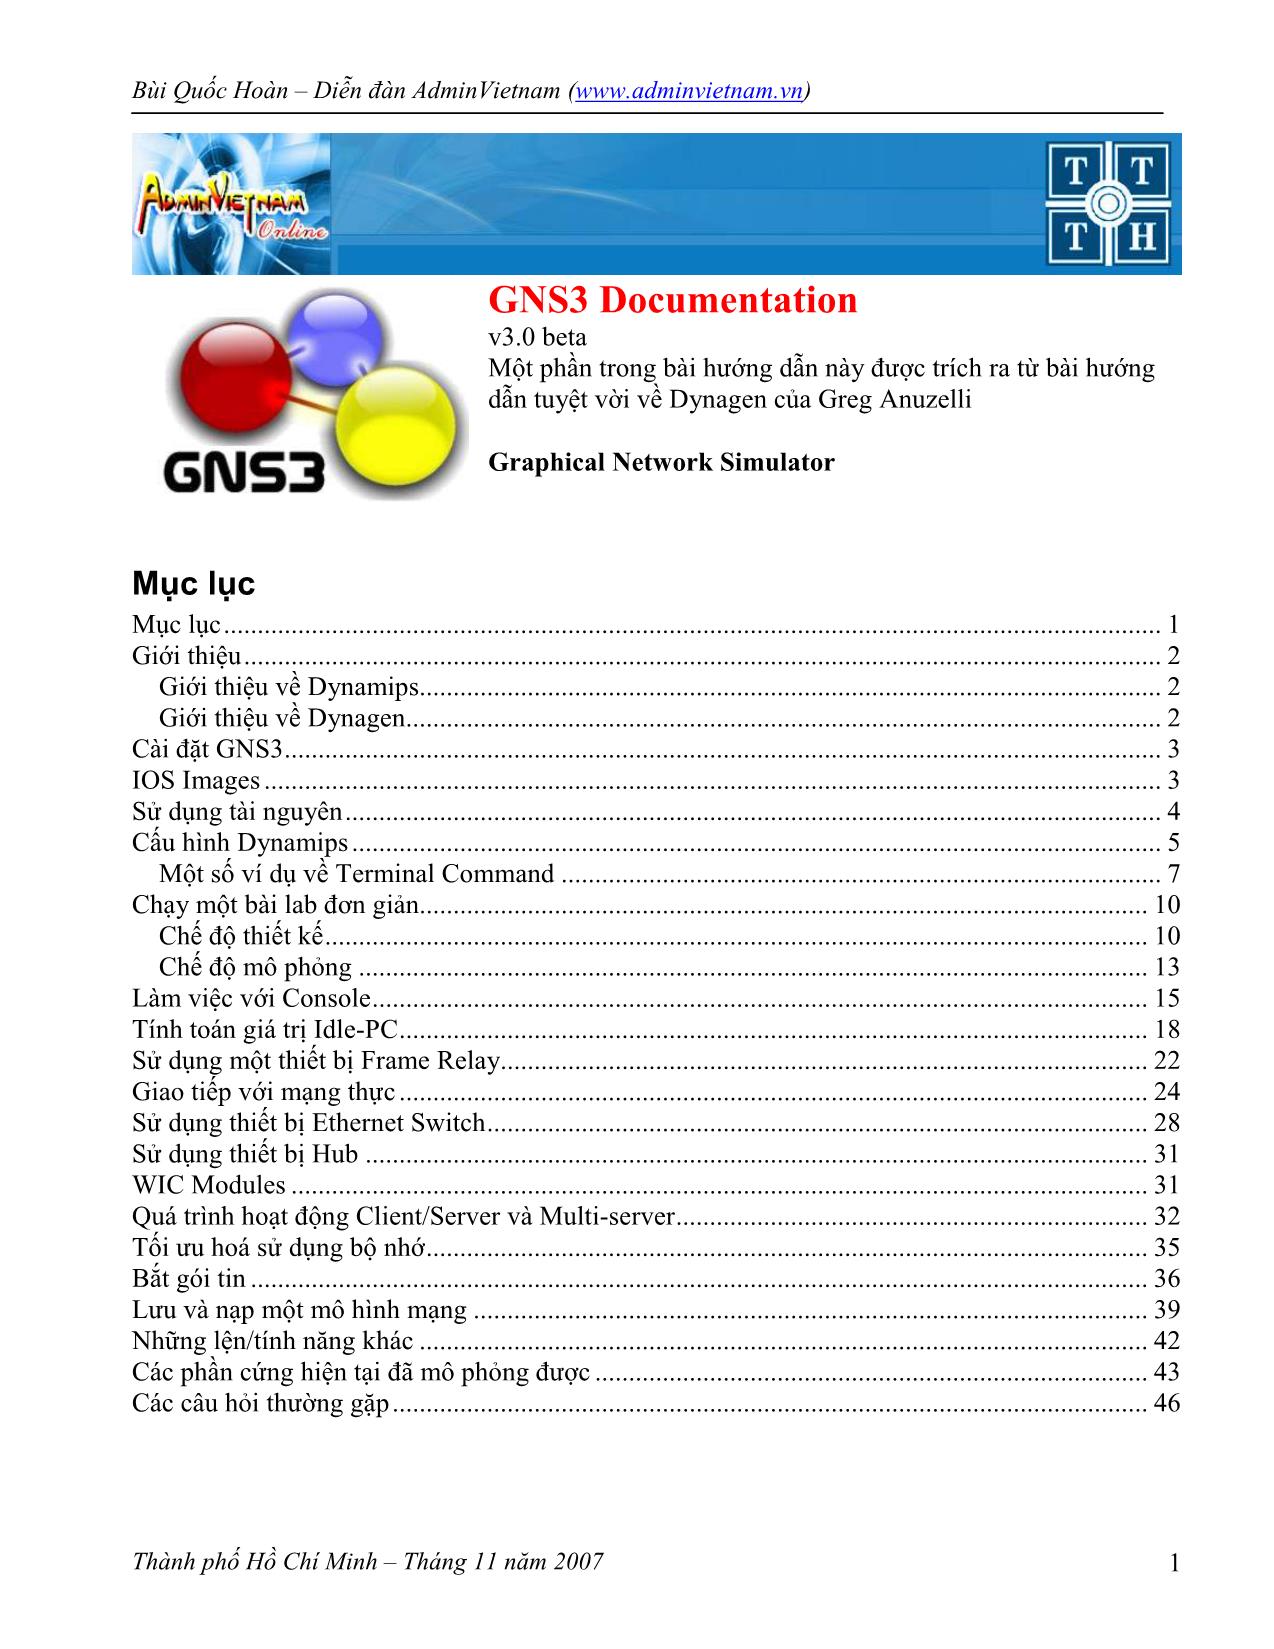 GNS3 Documentation trang 1